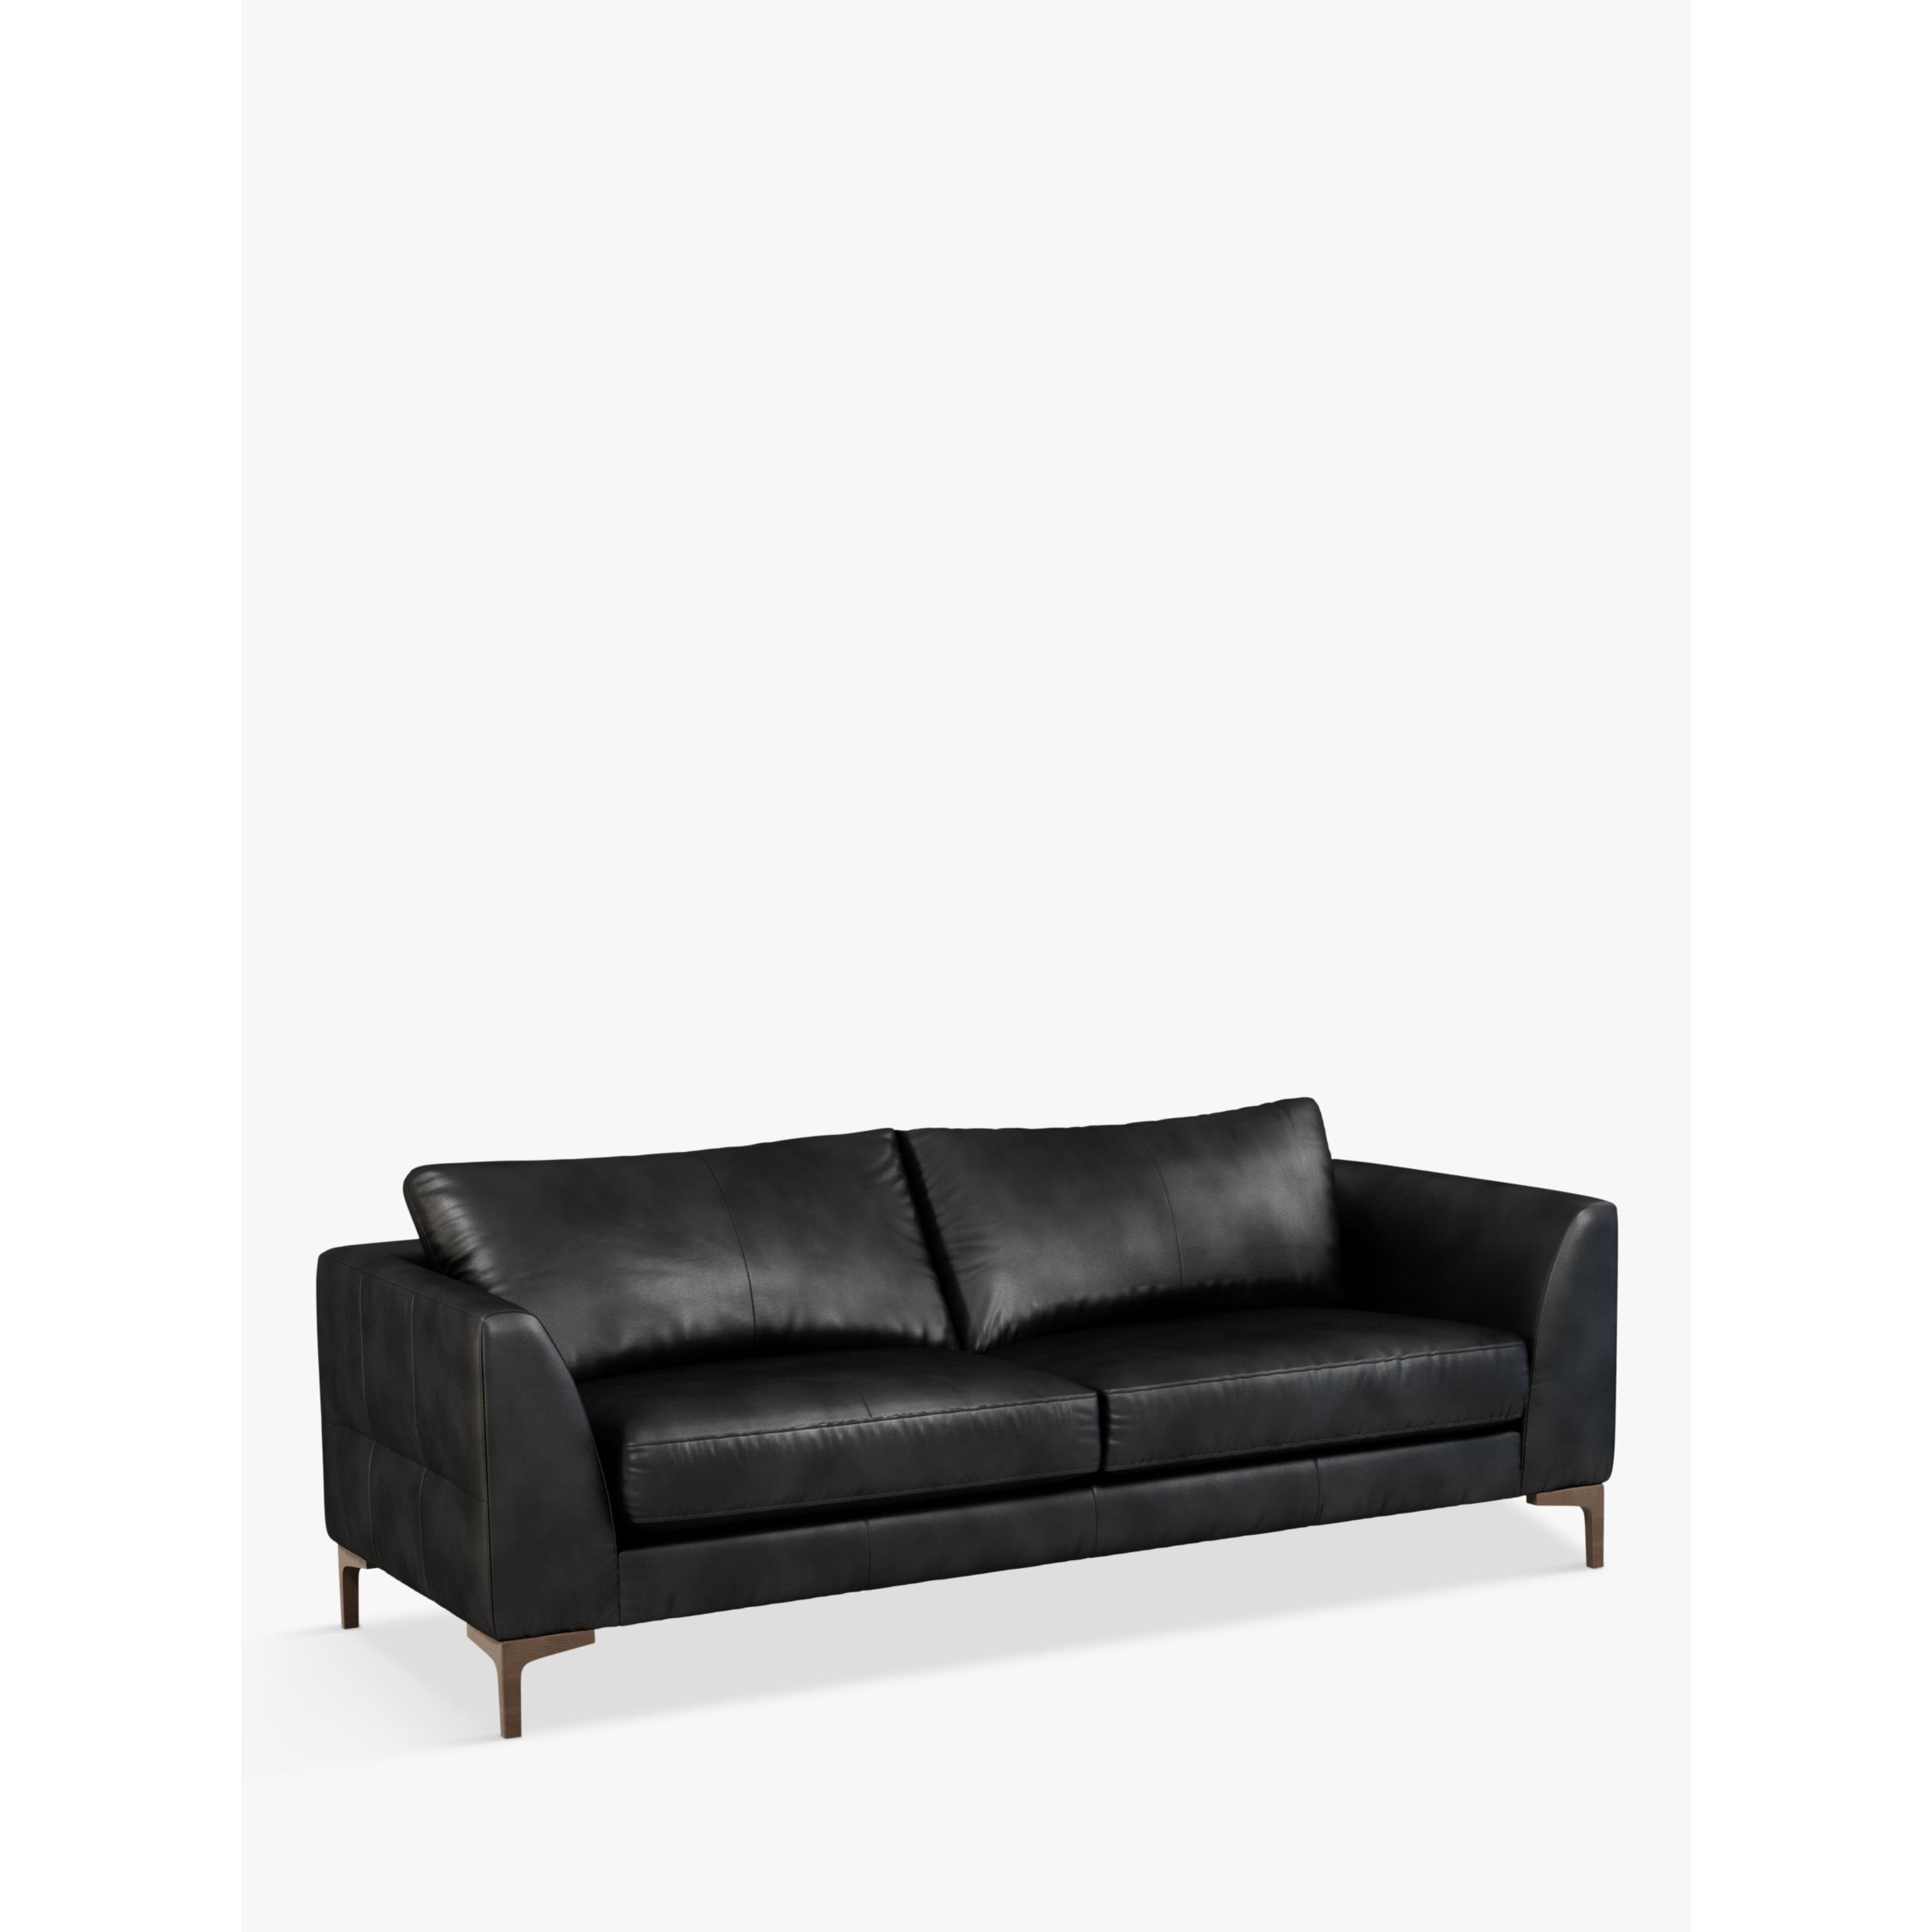 John Lewis Belgrave Grand 4 Seater Leather Sofa, Dark Leg - image 1